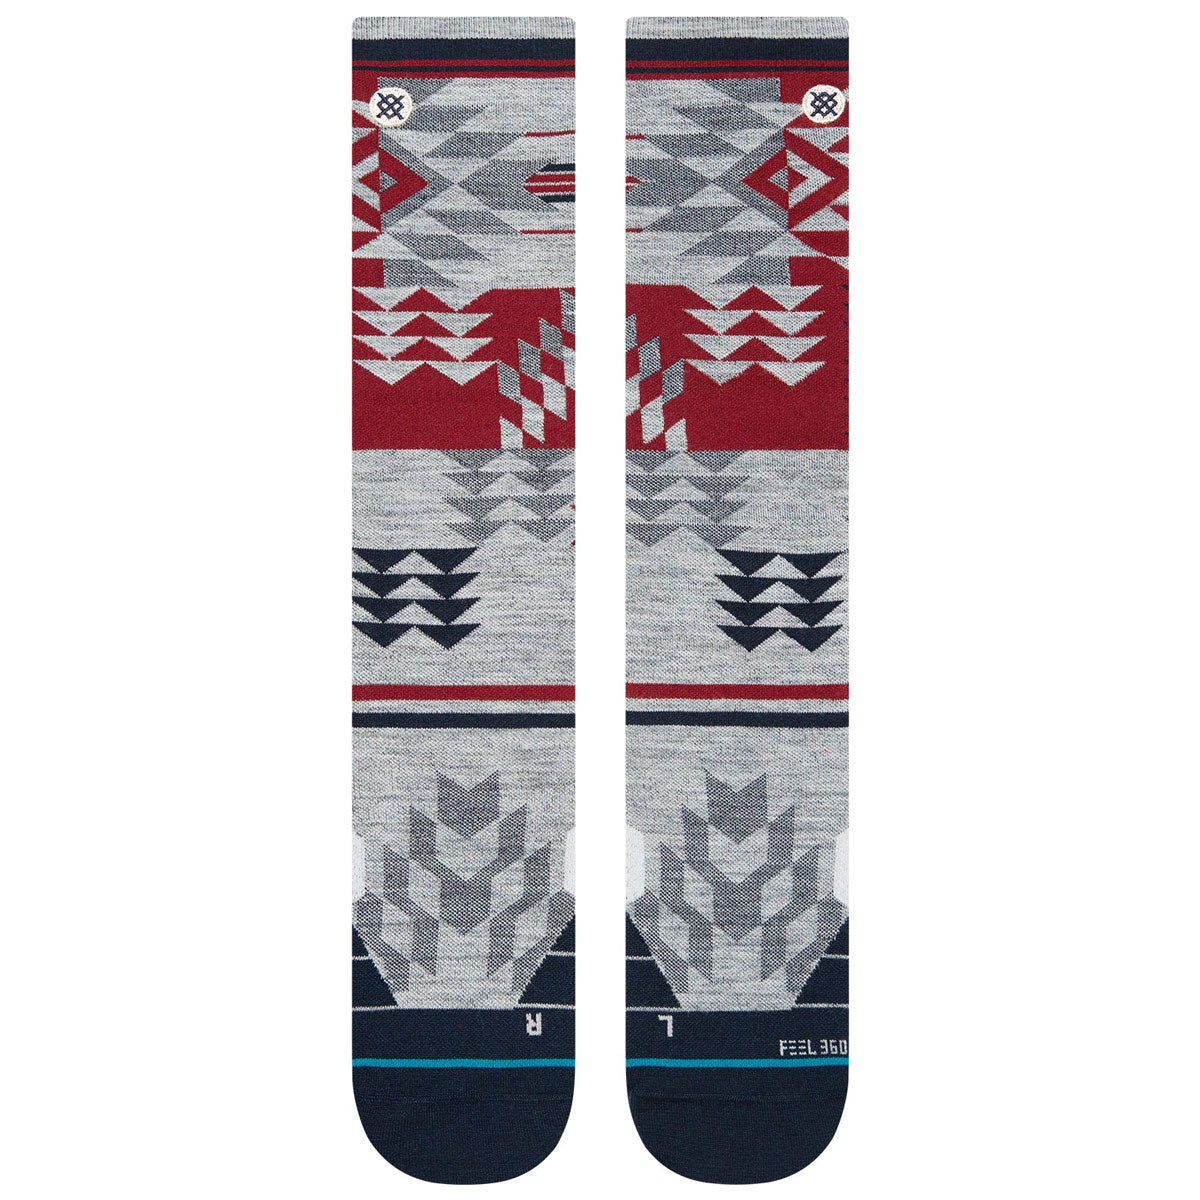 Stance Reaux Snowboard Socks - Natural image 2